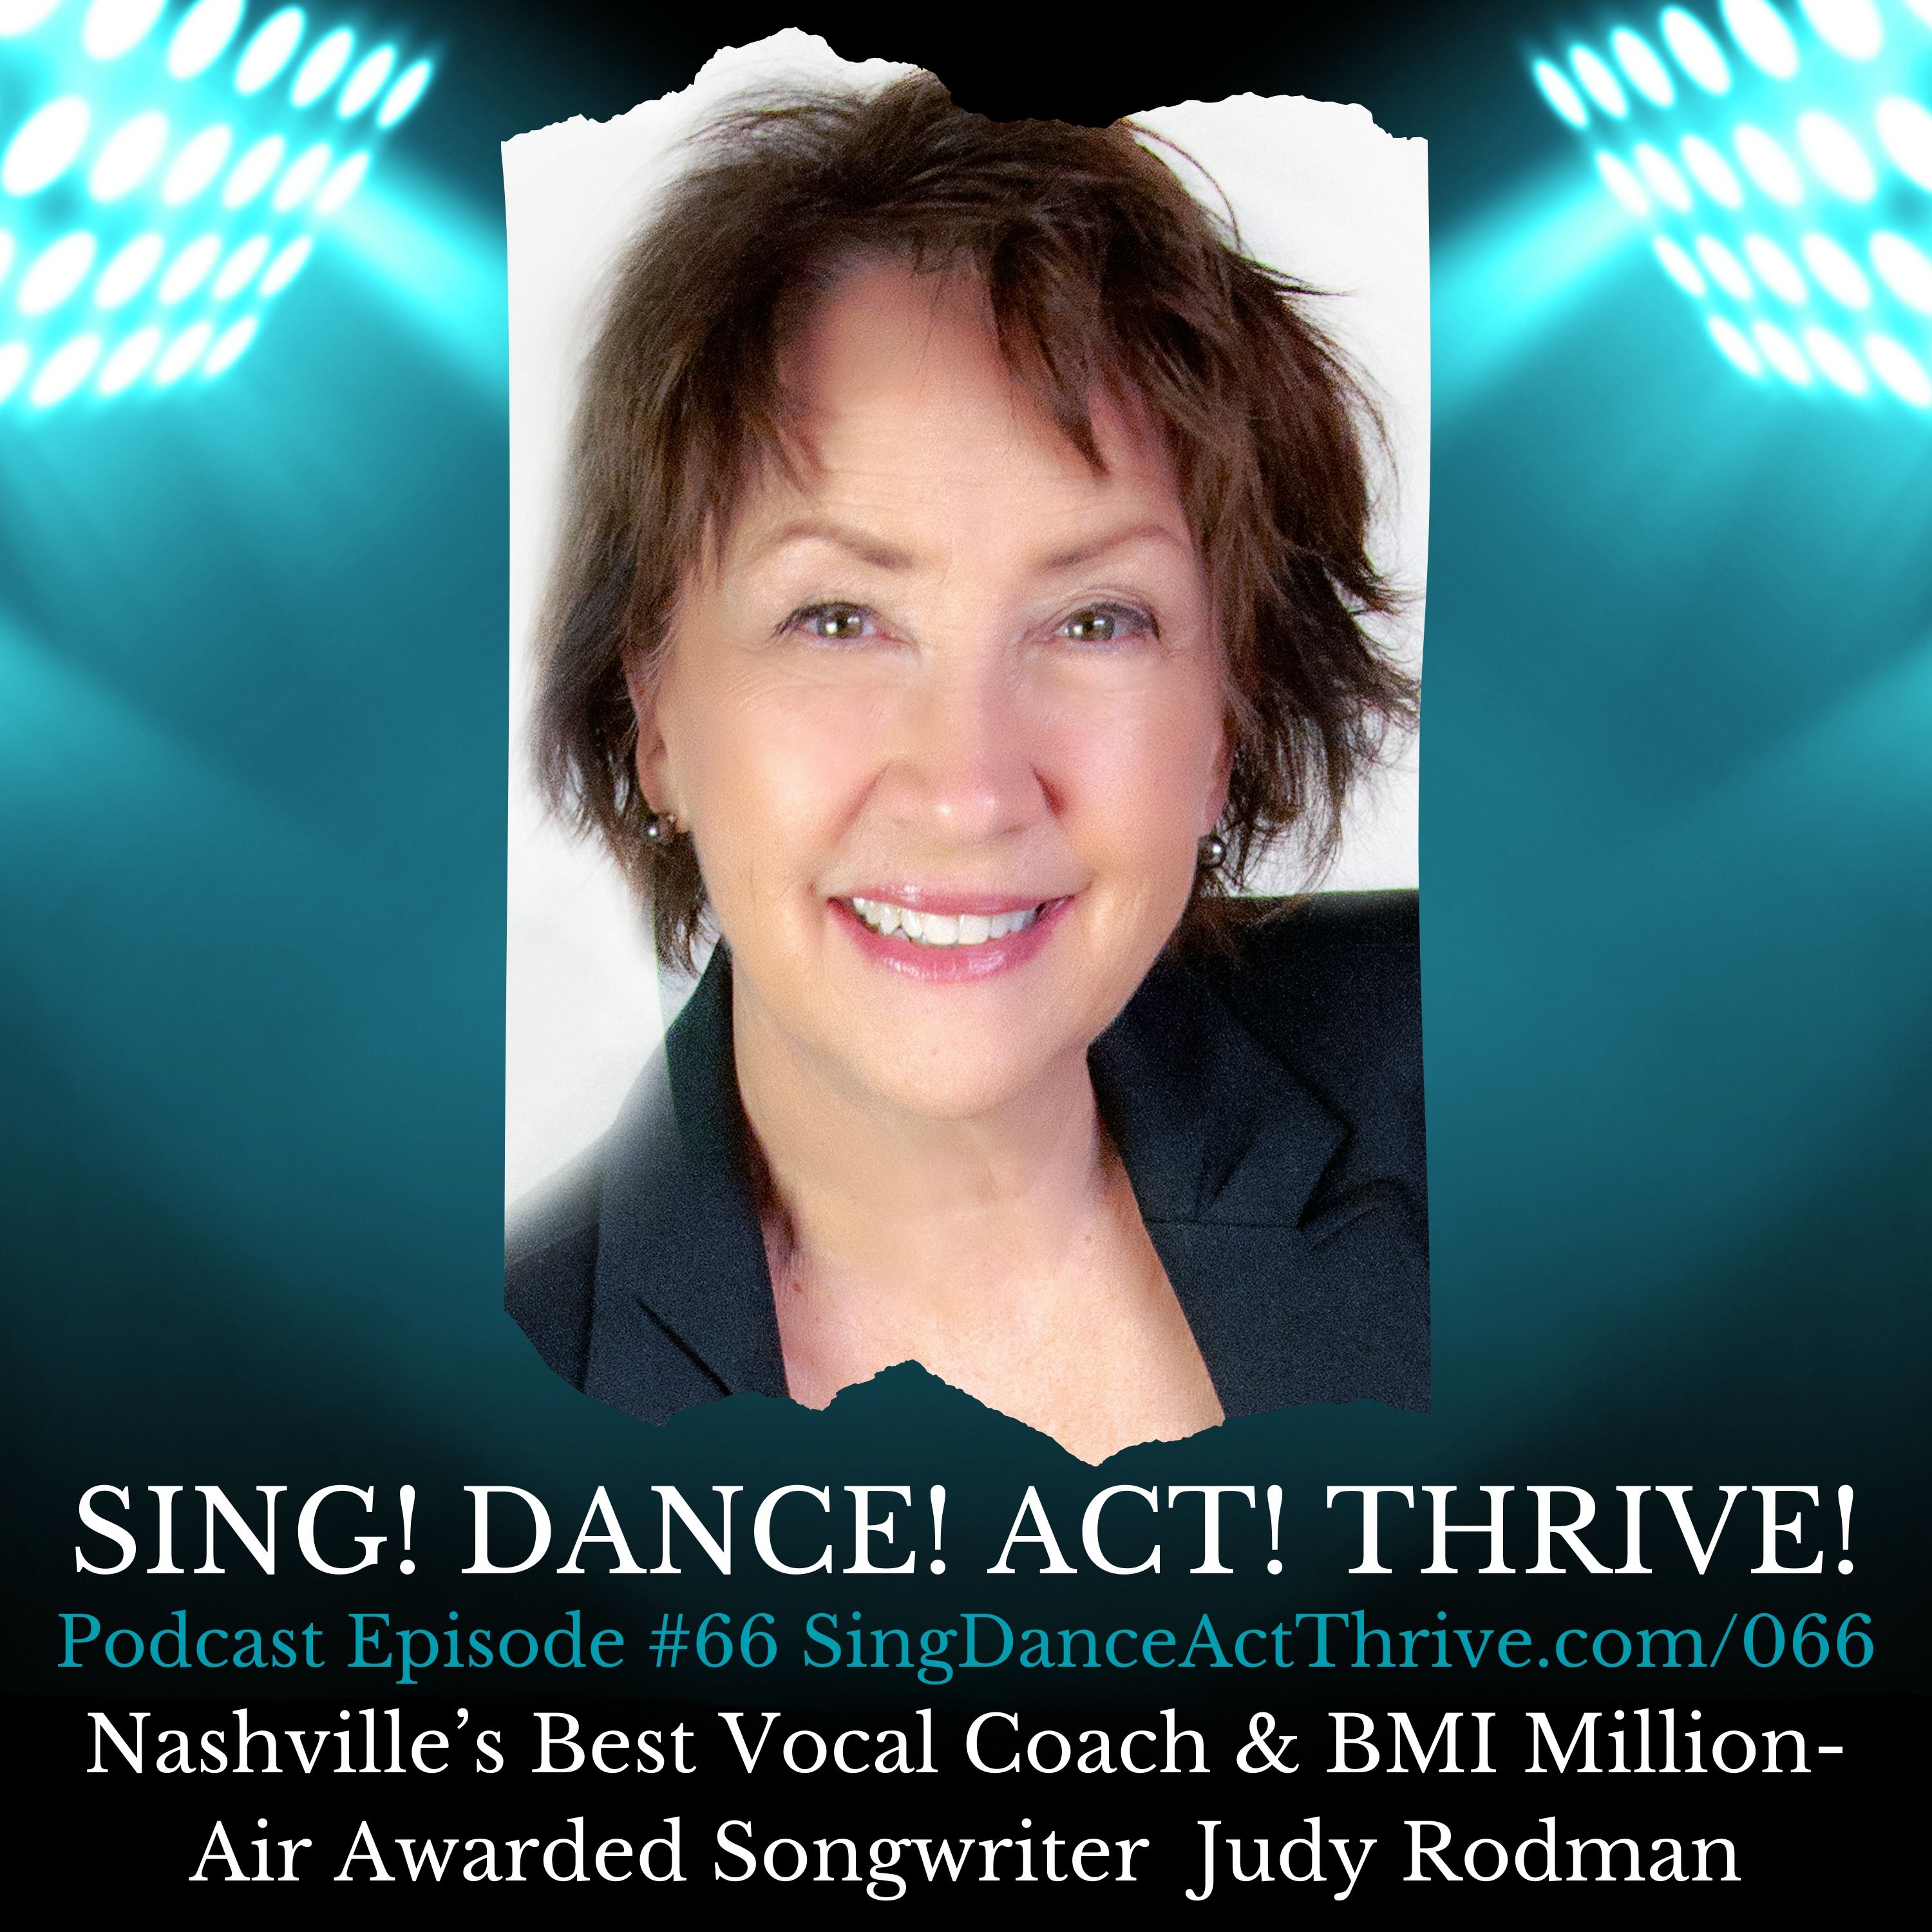 Nashville’s Best Vocal Coach & BMI Million-Air Awarded Songwriter  Judy Rodman